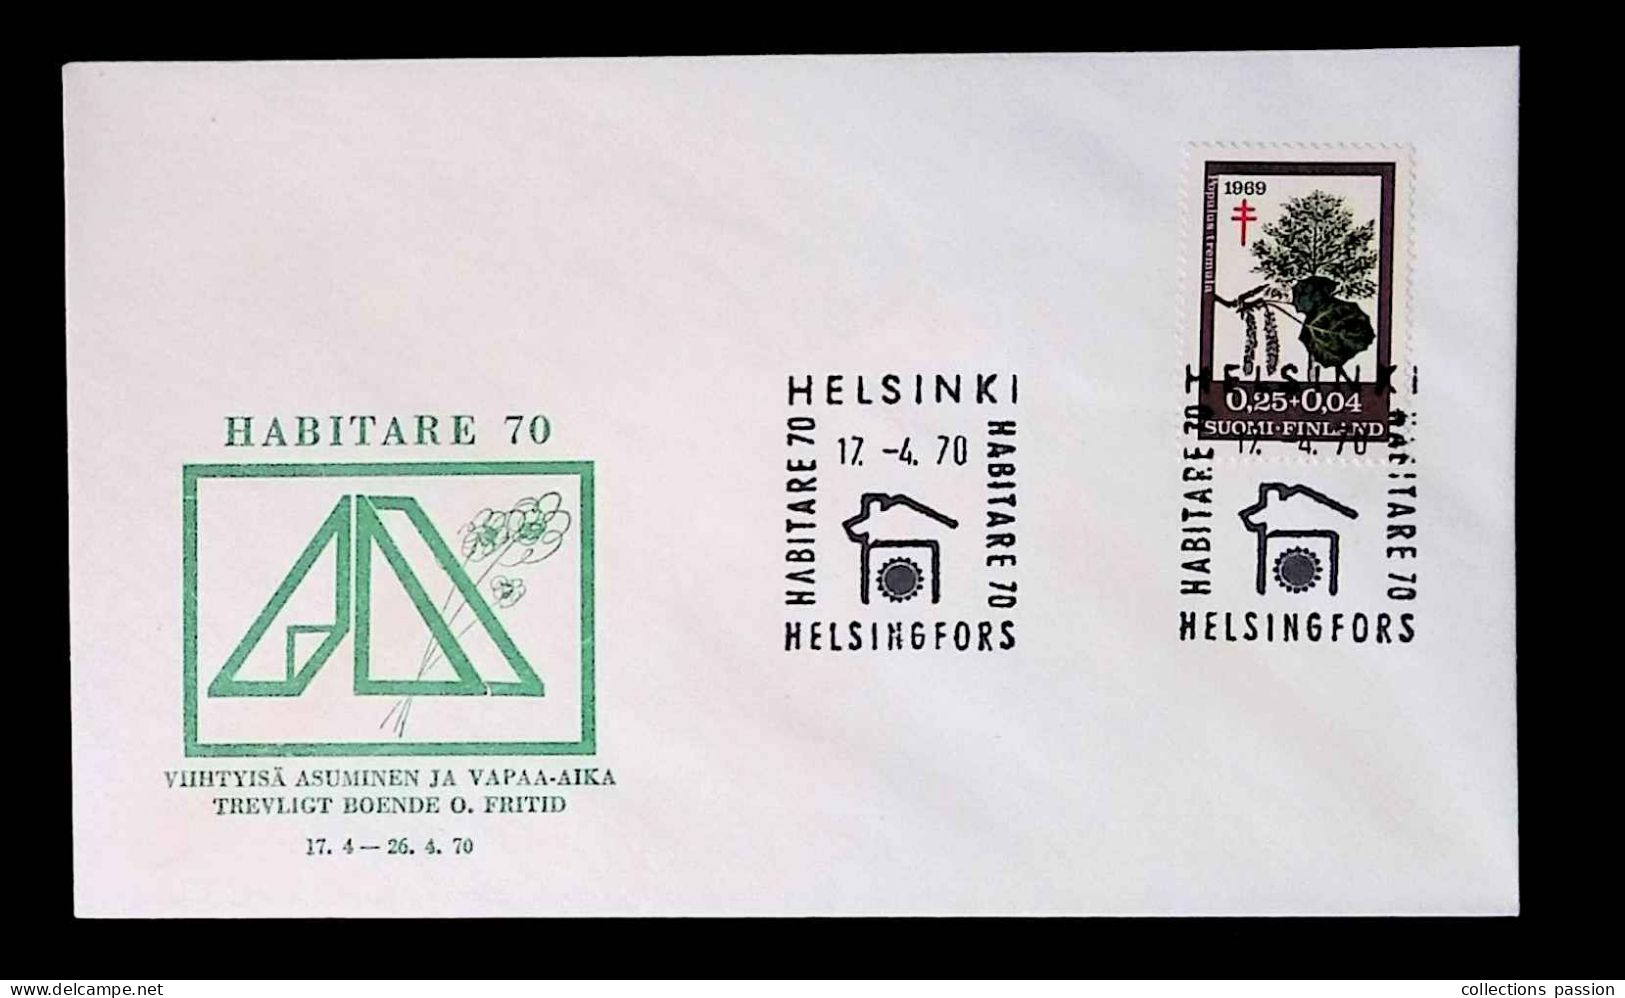 CL, Lettre, FDC, Suomi-Finland, Helsinki, 17-4-70, Habitare 70 - Lettres & Documents